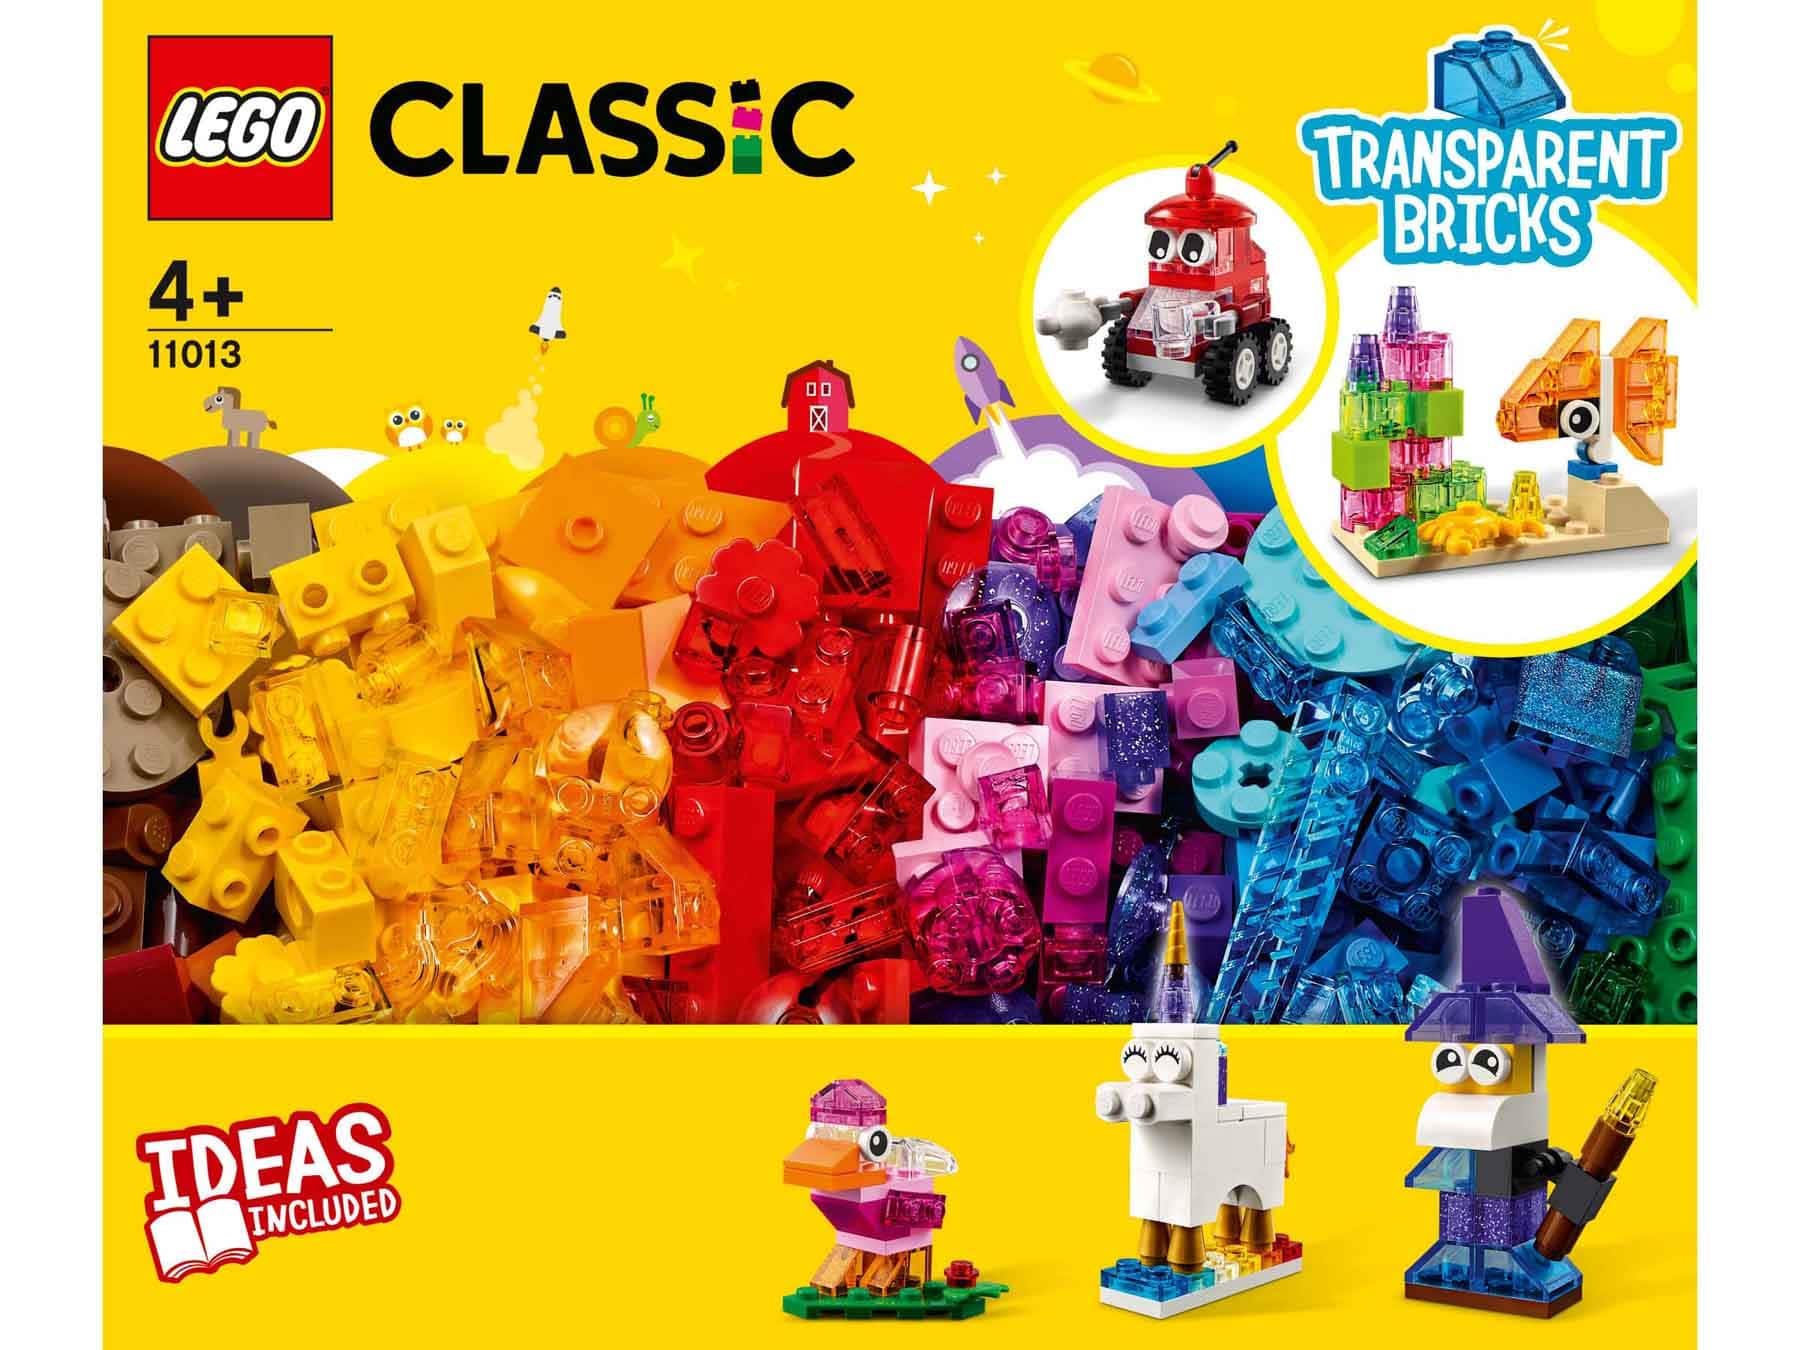 LEGO CREATIVE TRANSPARENT BRICKS LEGO CLASSIC